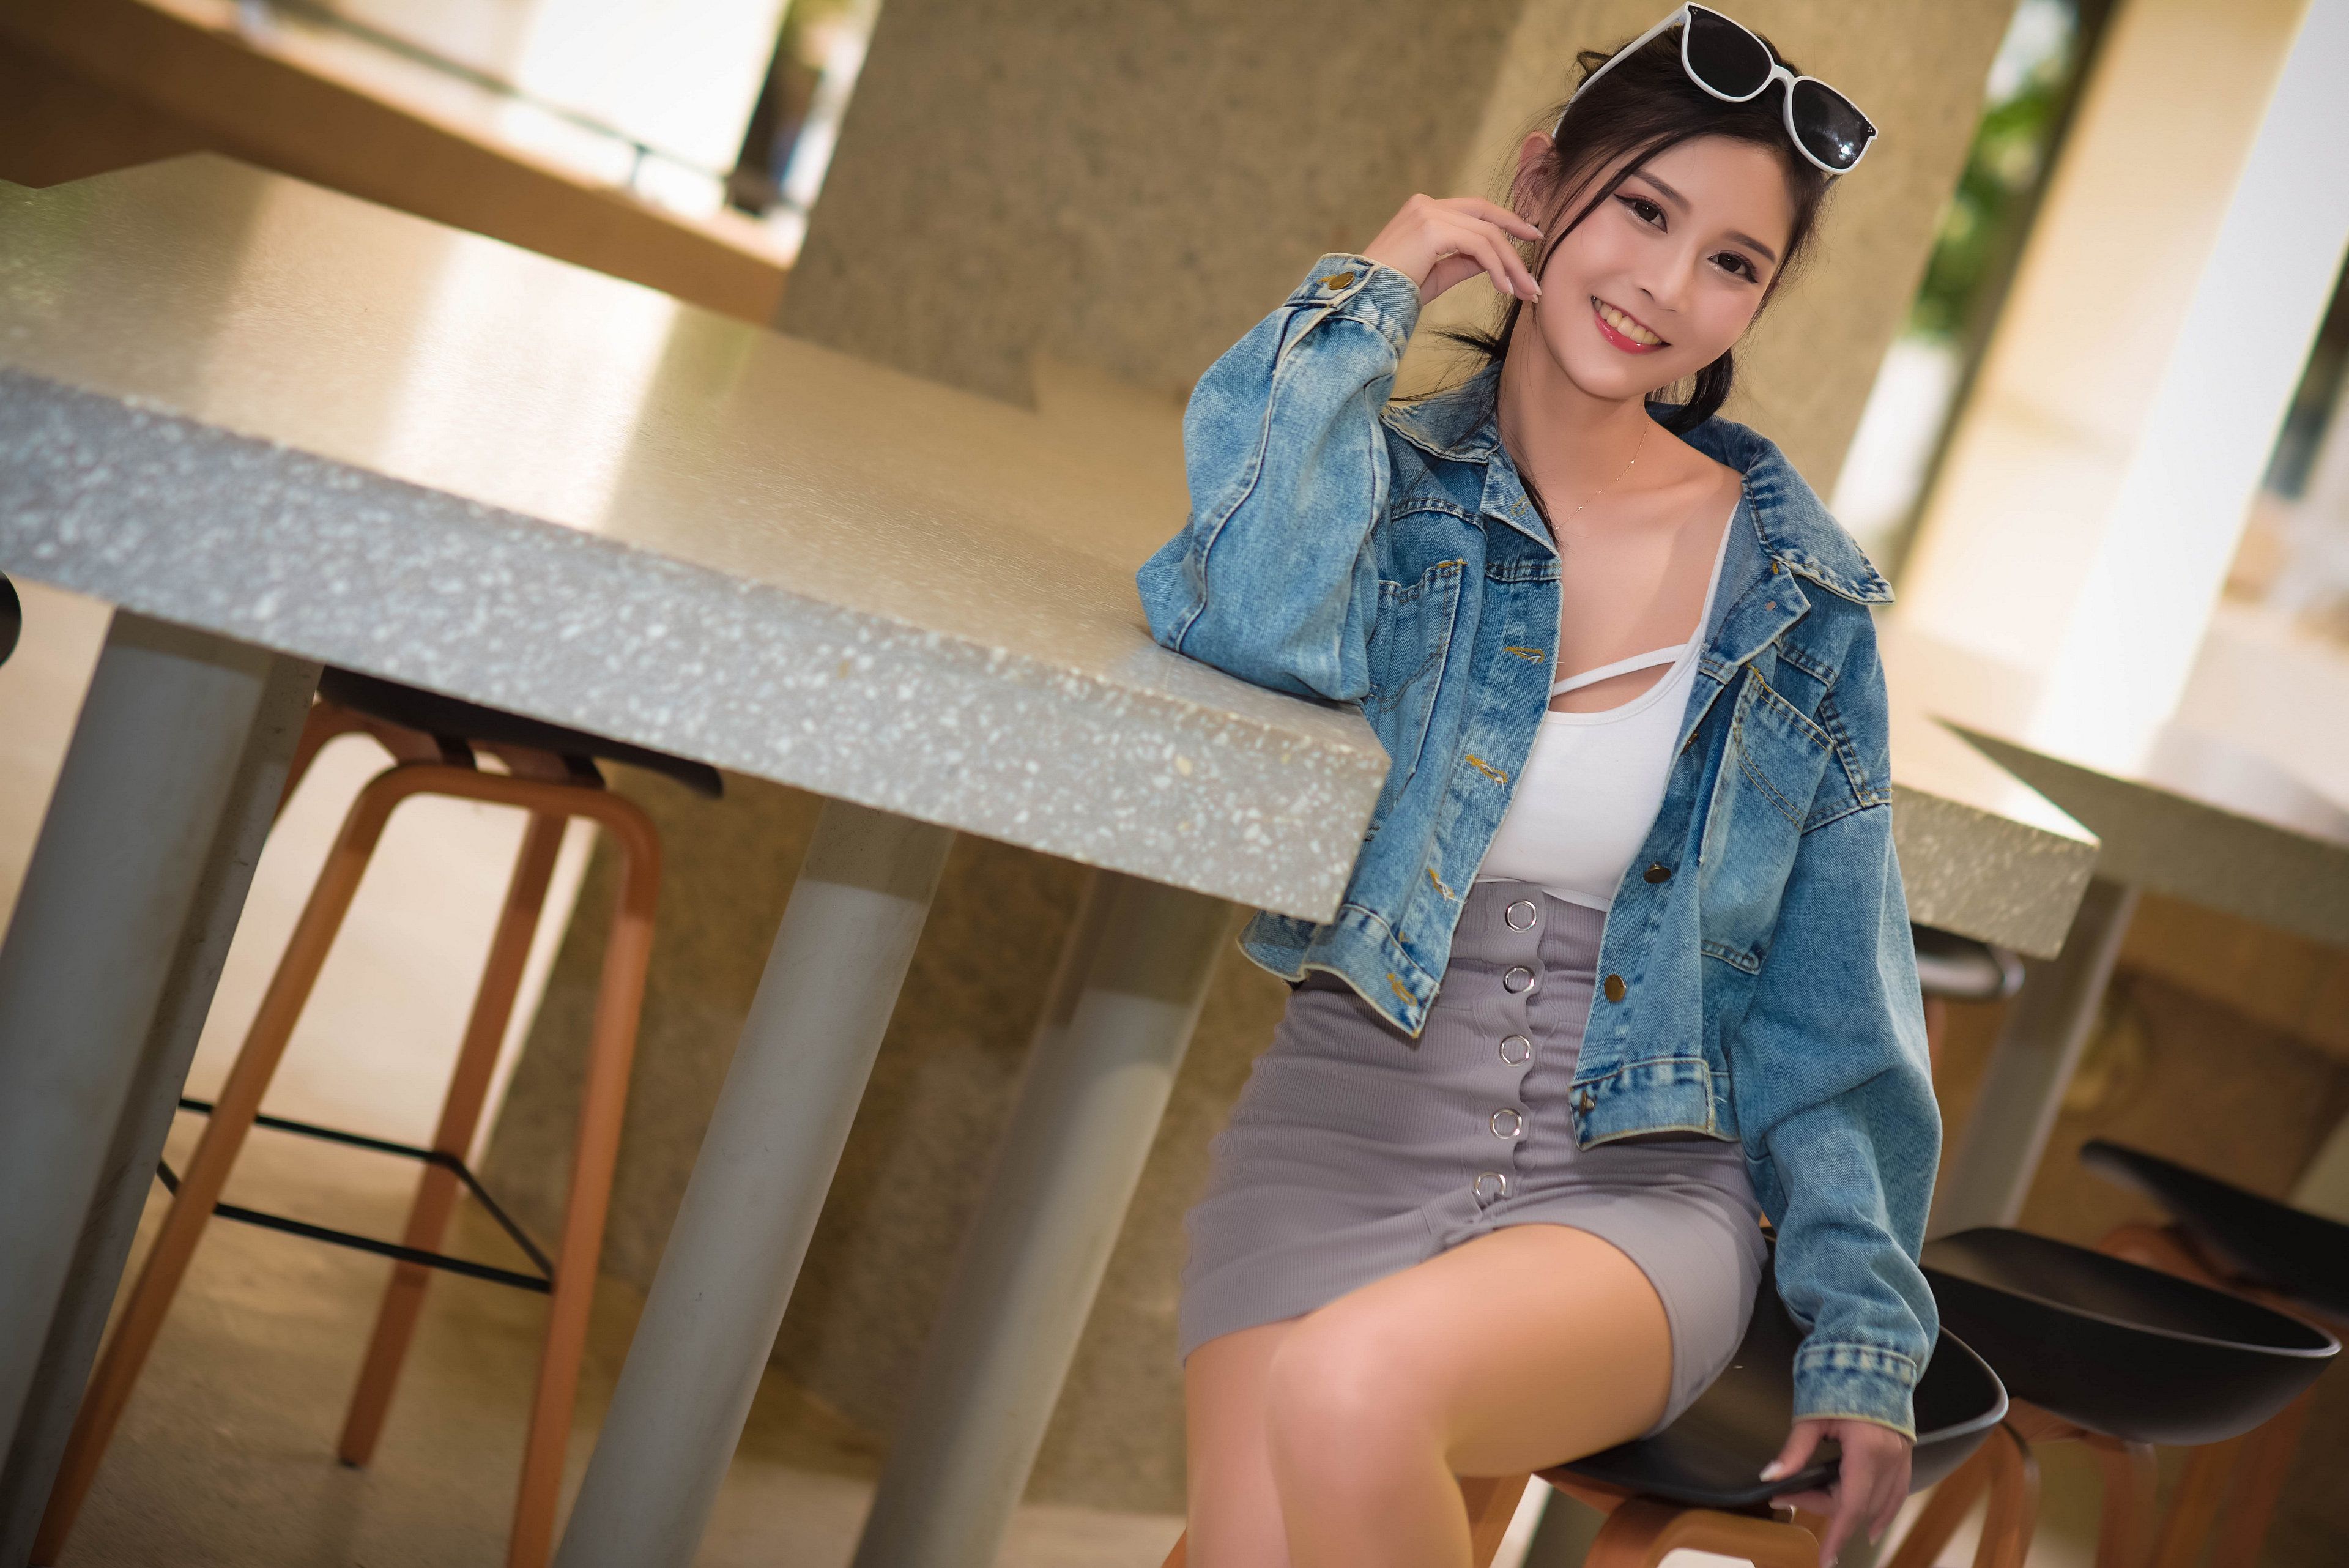 Asian Model Women Long Hair Dark Hair Jeans Jacket Skirt Sunglasses Table Sitting Leaning Chair Whit 3840x2563